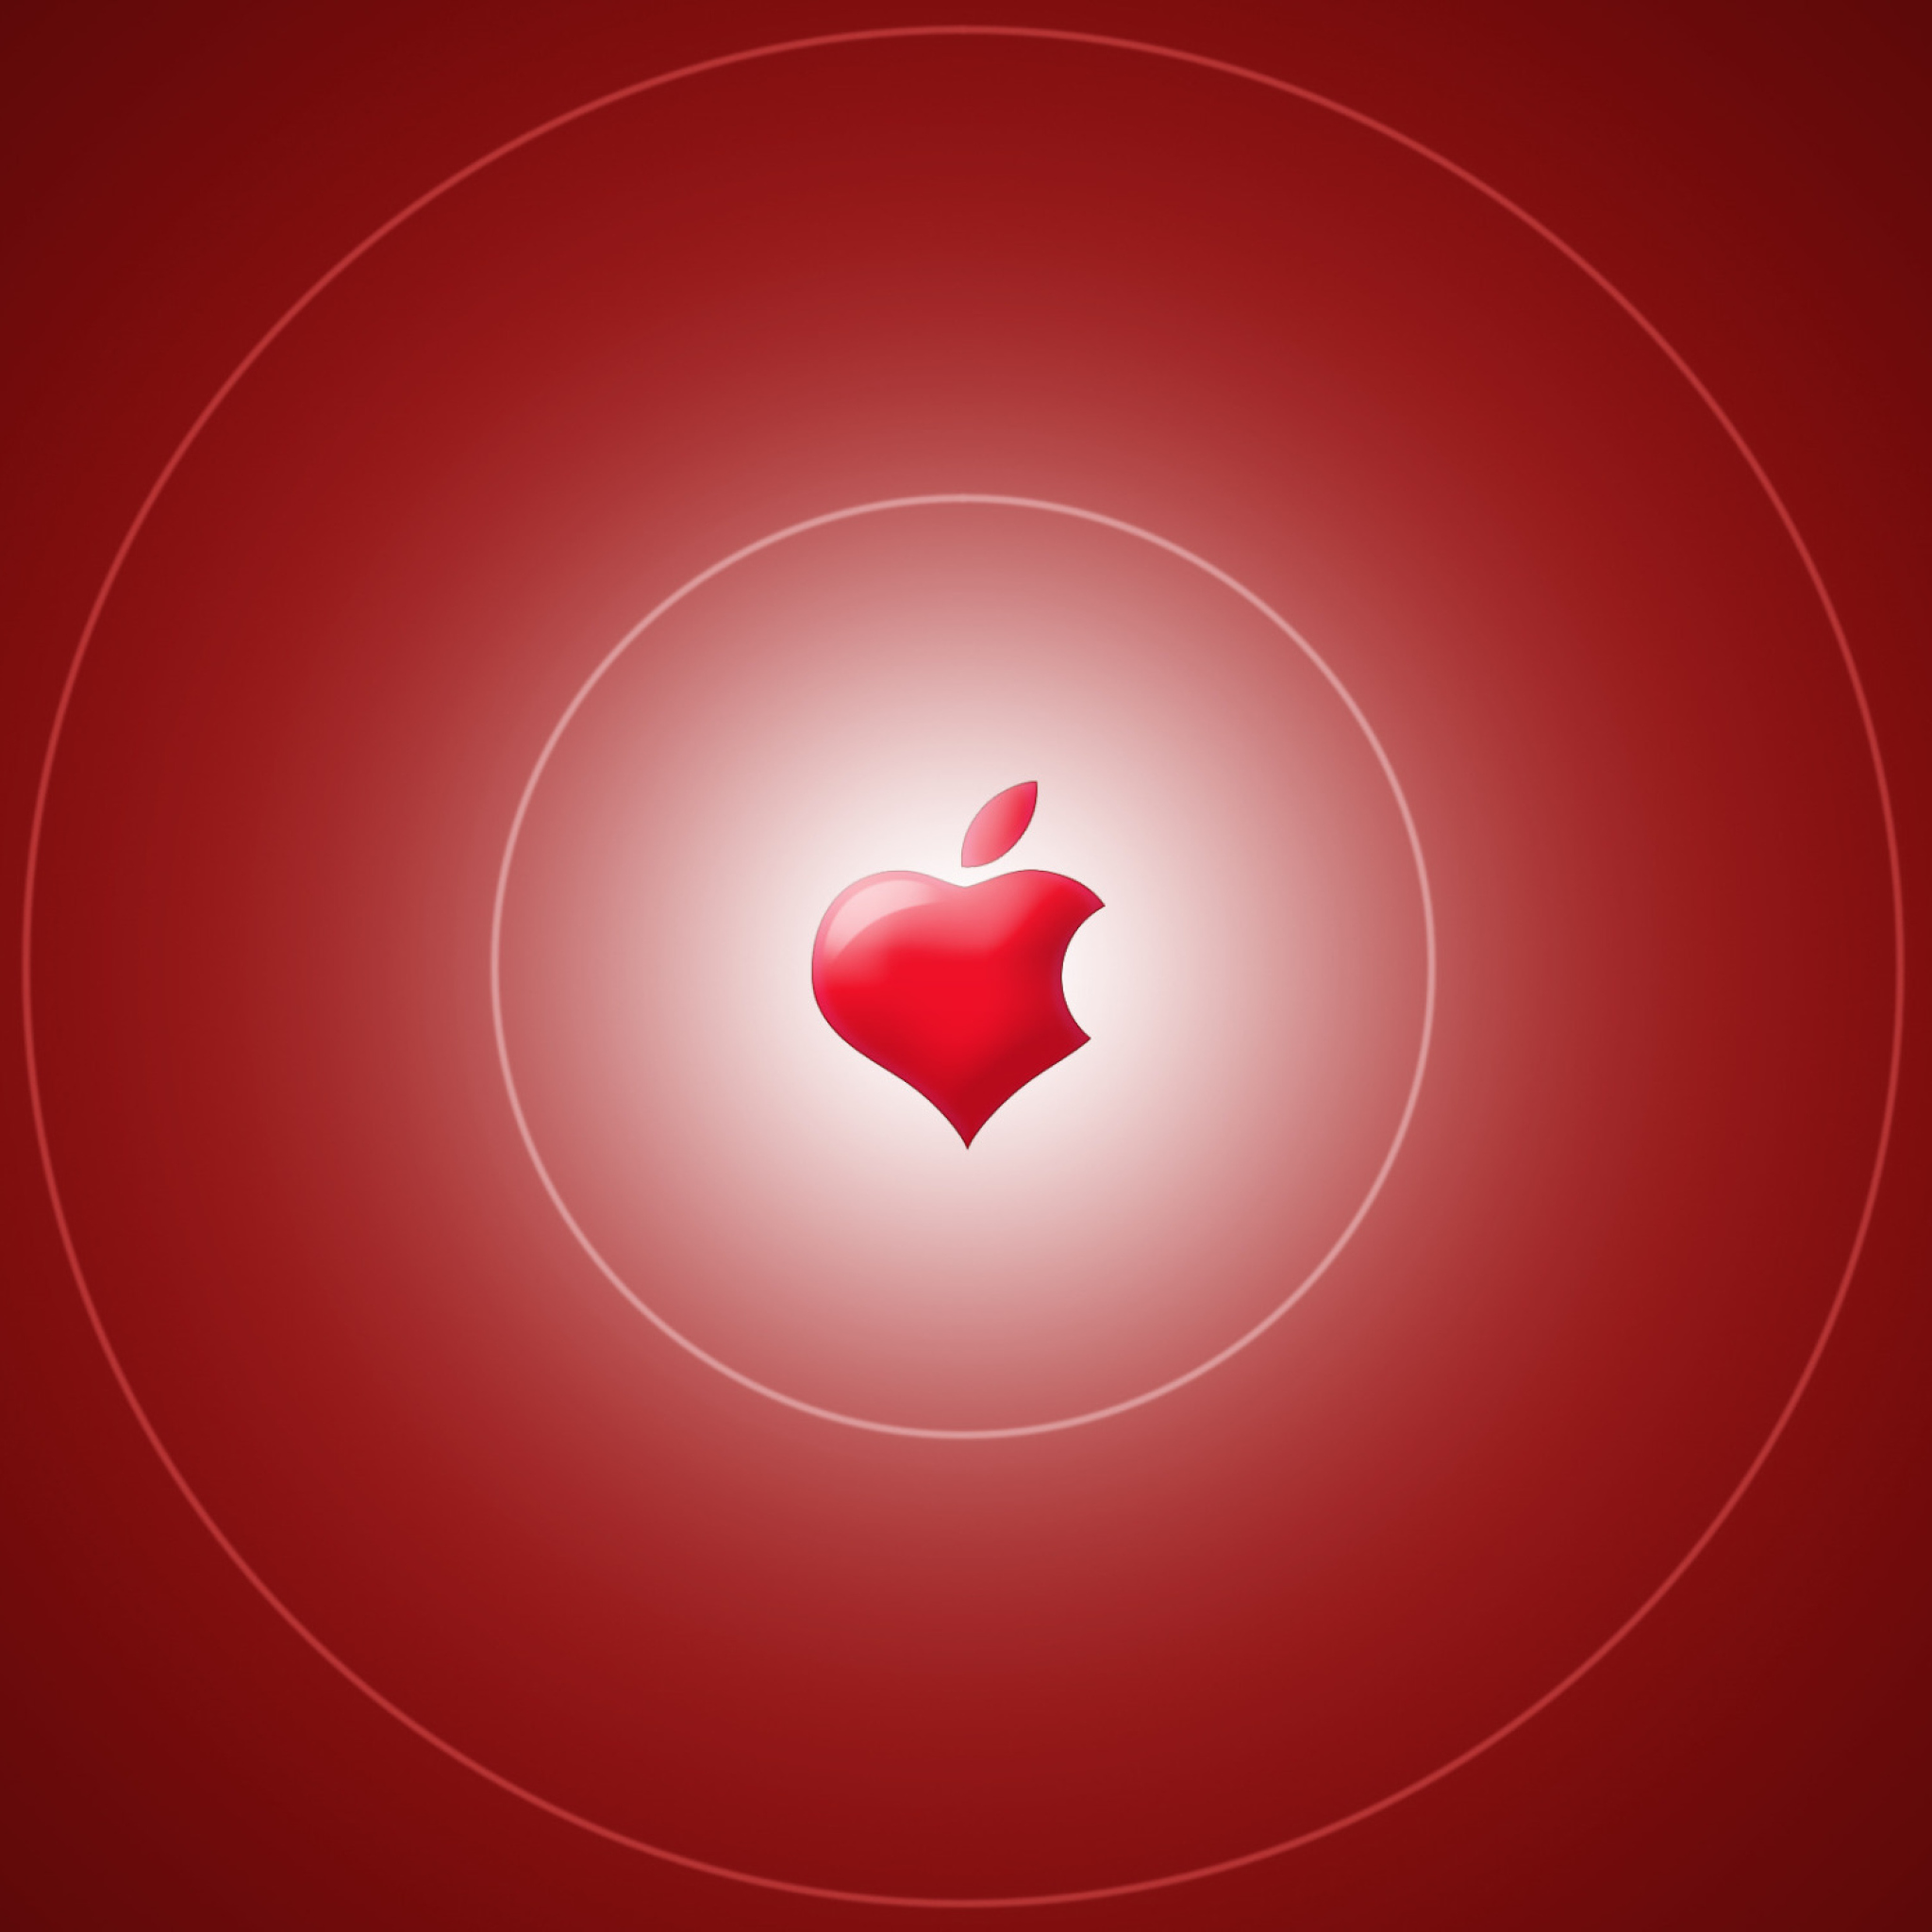 Red Apple wallpaper 2048x2048